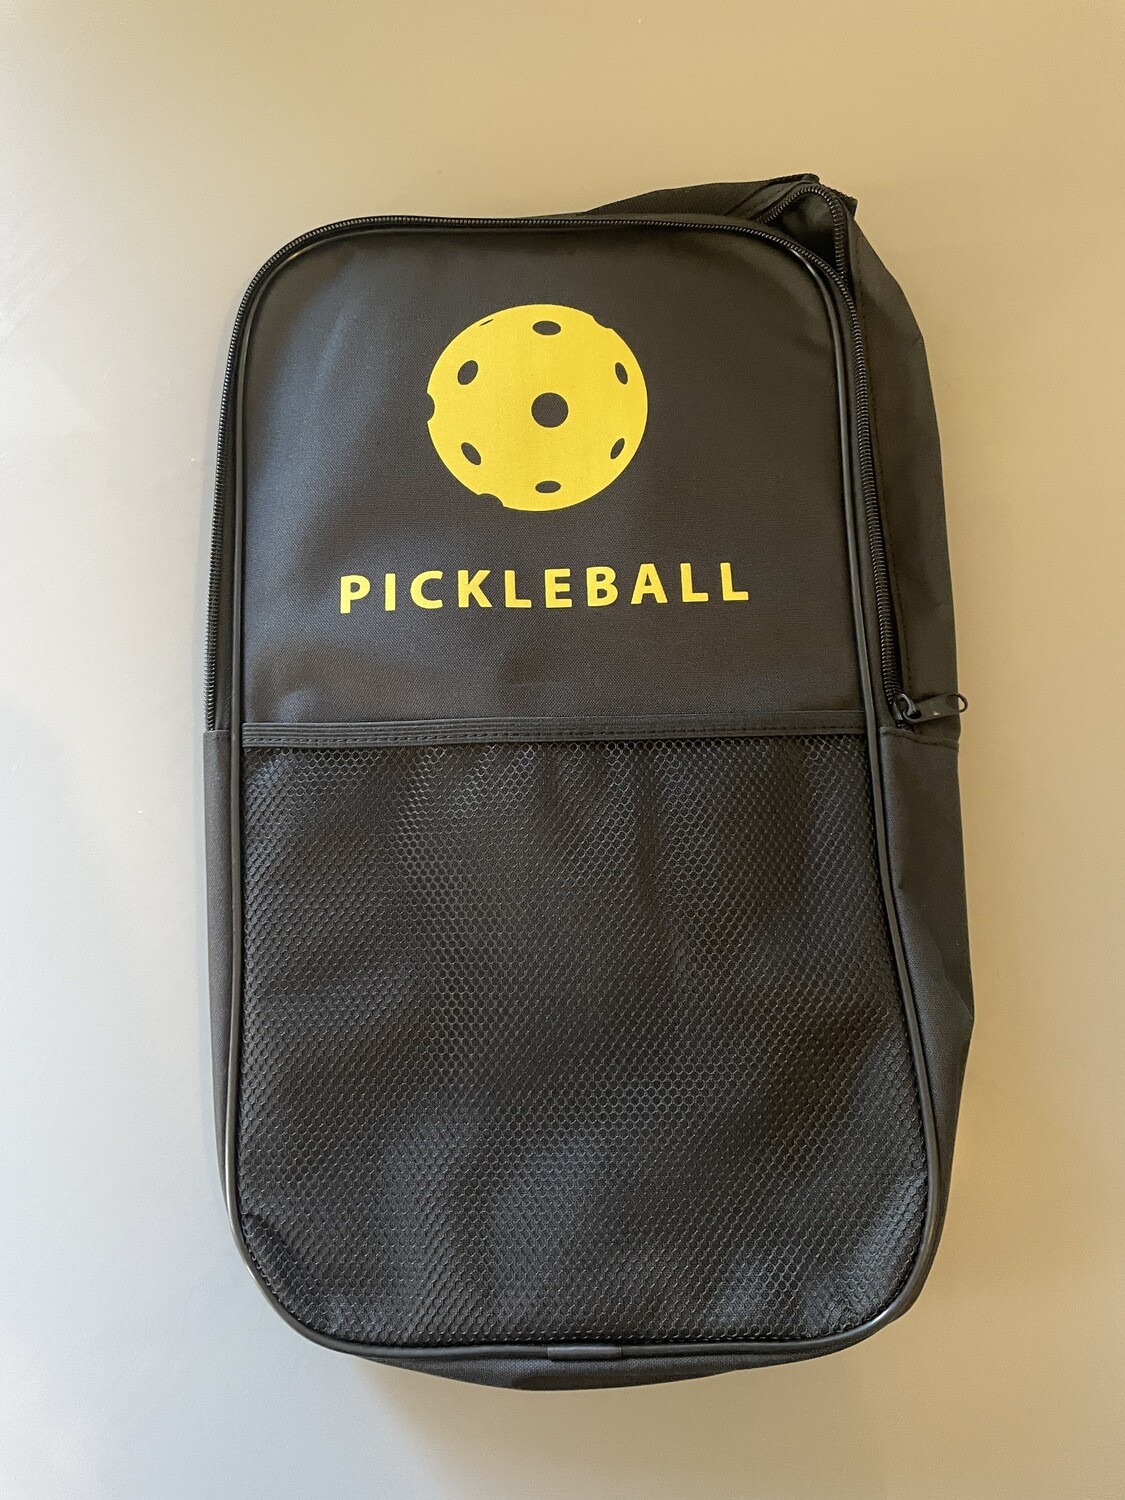 Pickleball racquet Bag - Black